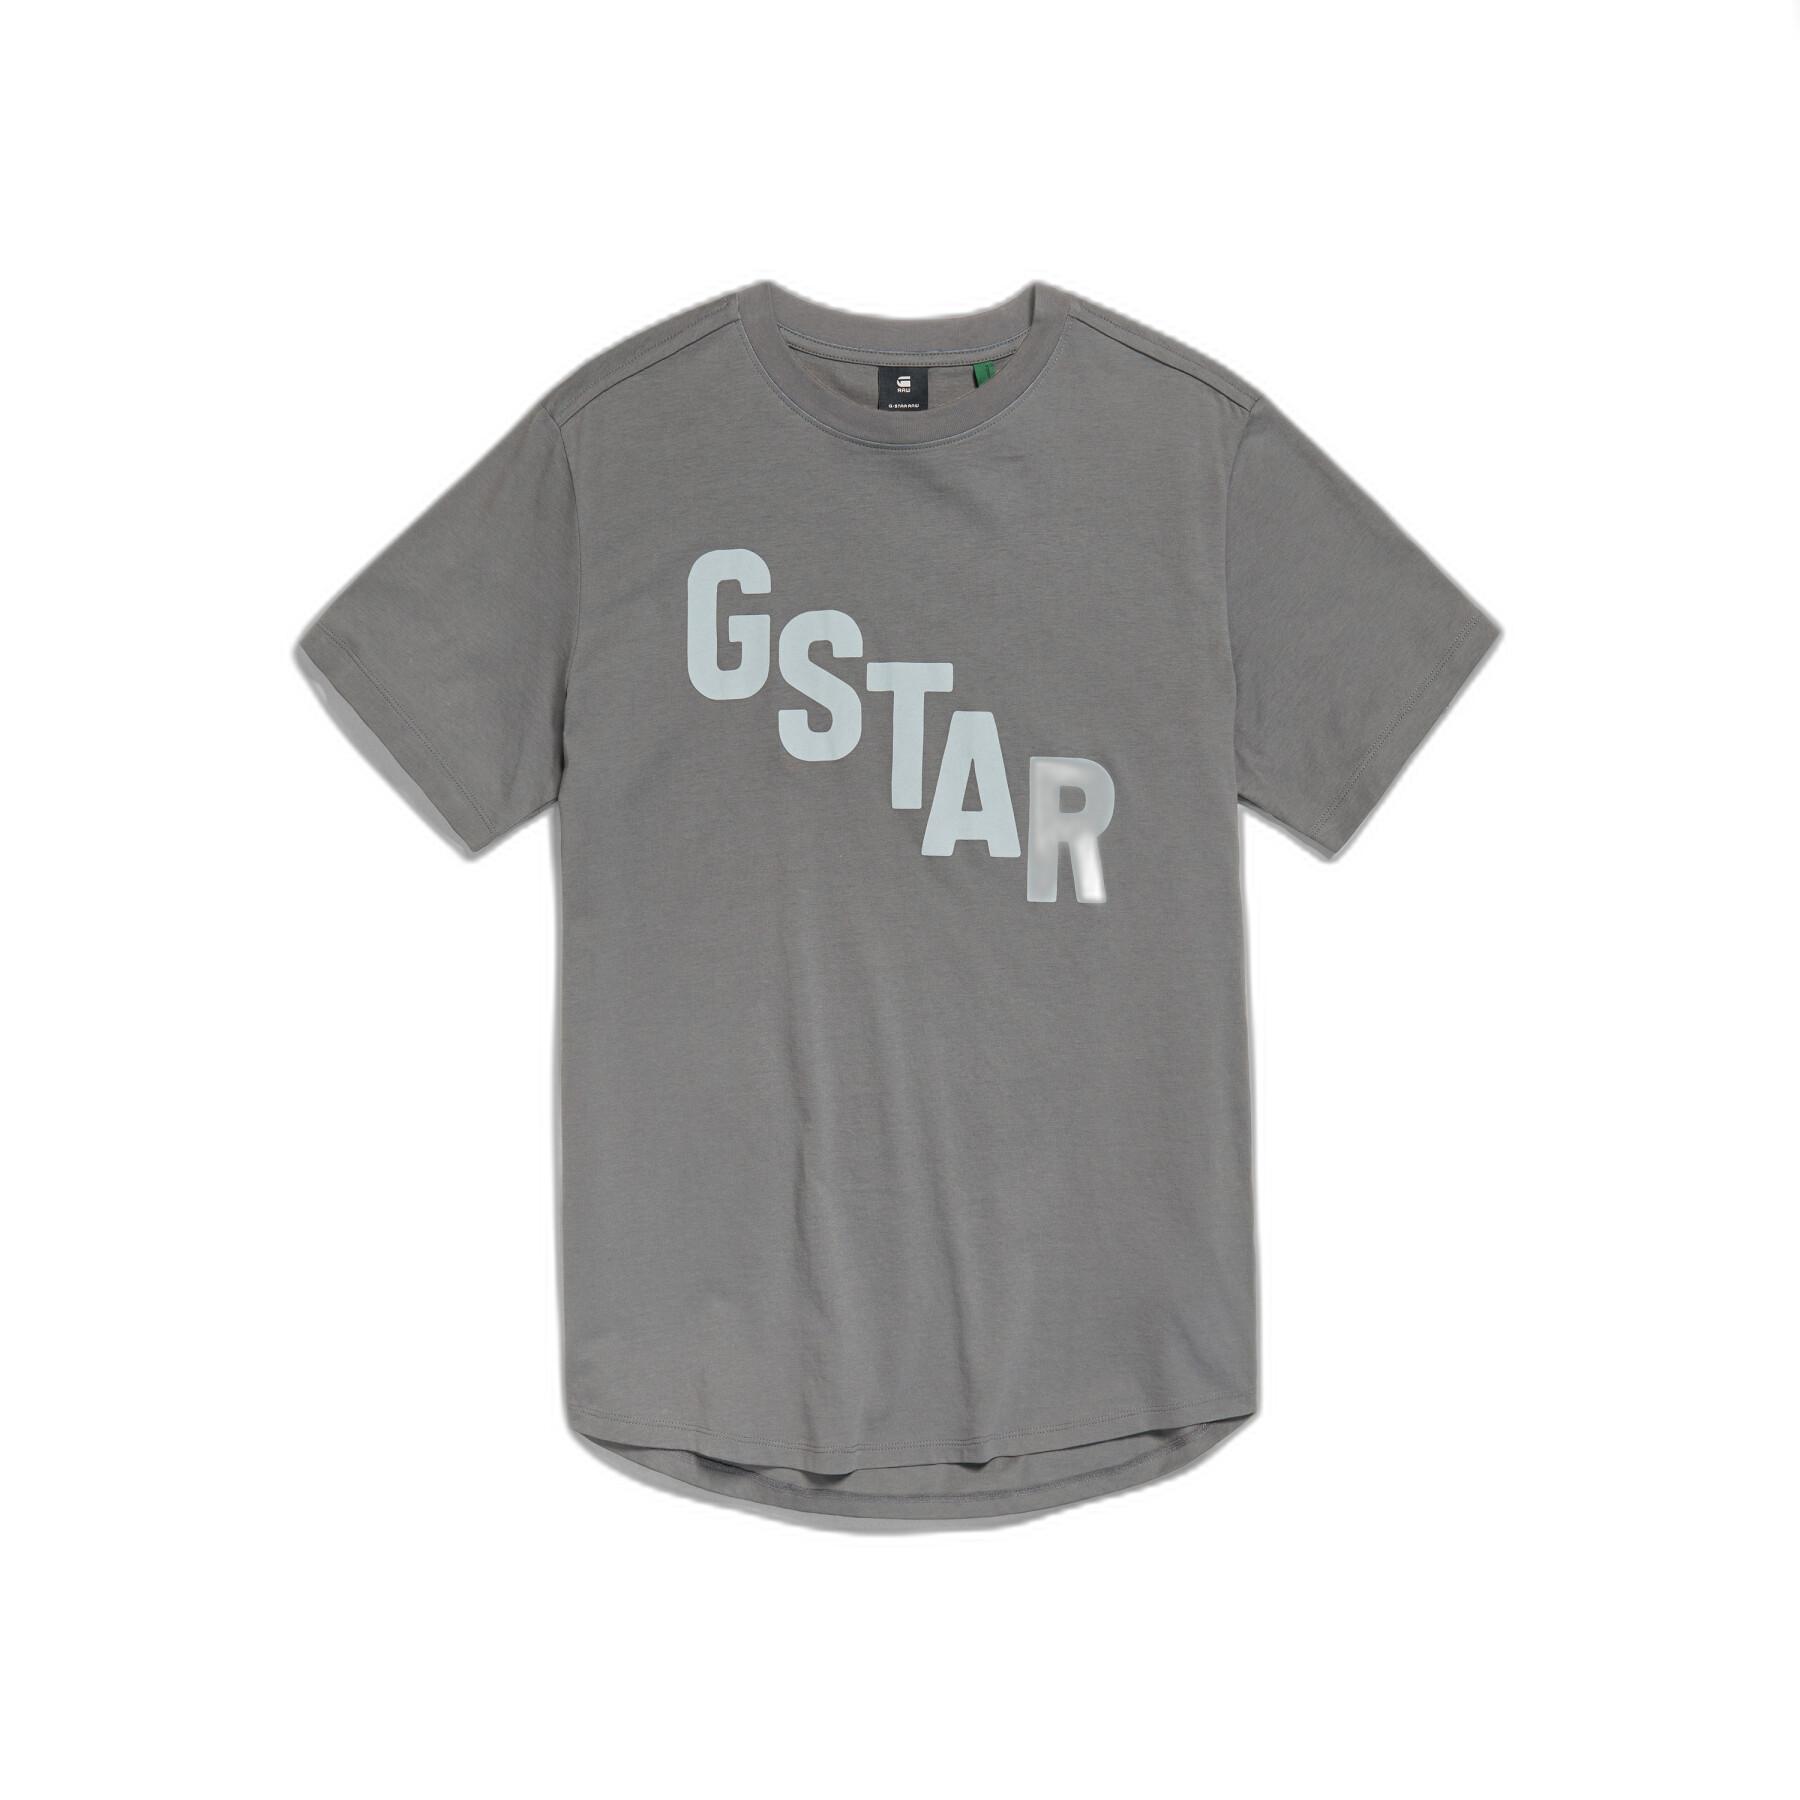 T-shirt G-Star Lash Sports Graphic